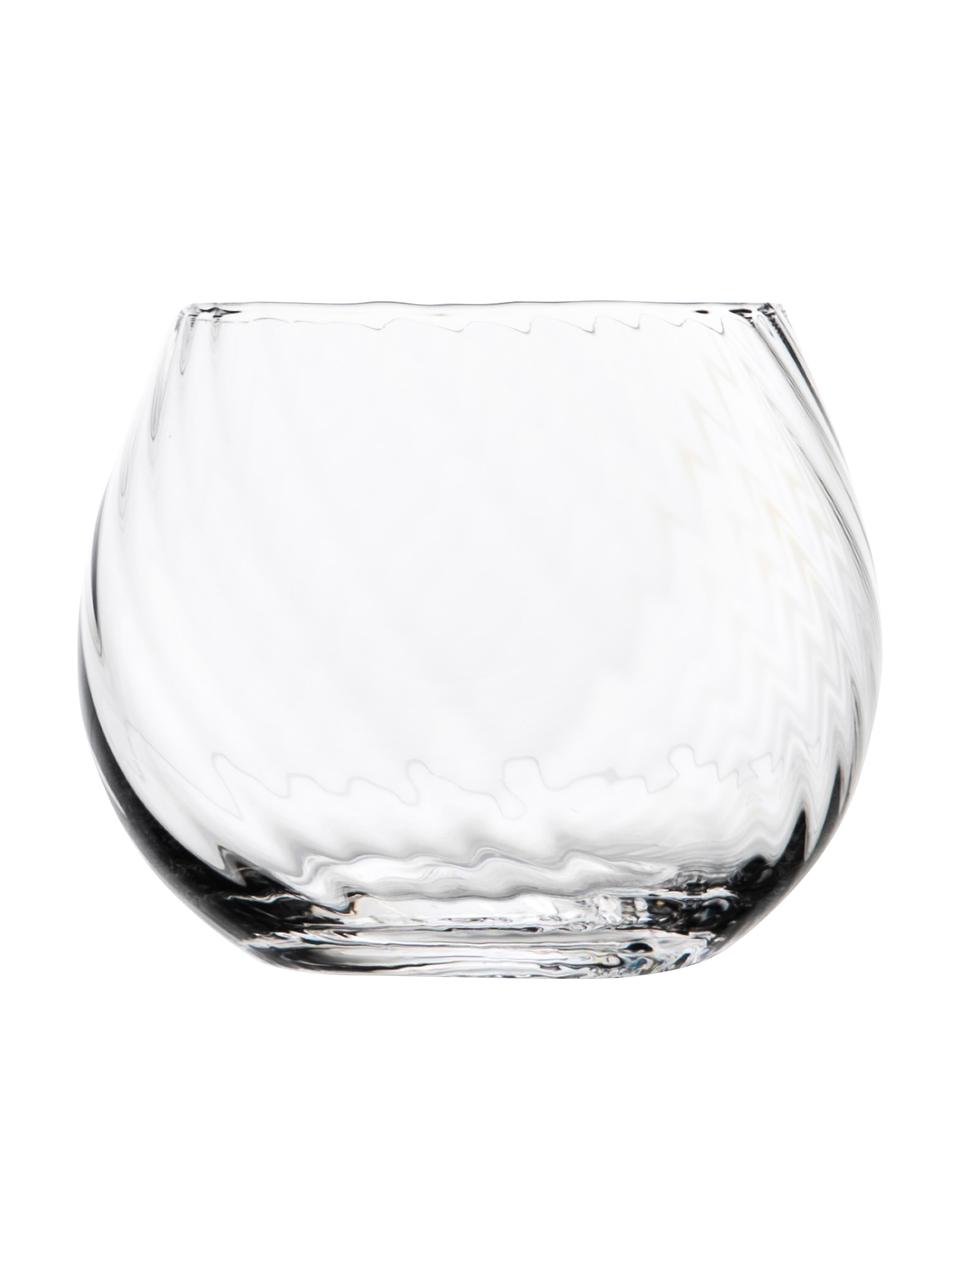 Waterglazen Opacity met groefstructuur, 6 stuks, Glas, Transparant, Ø 8 x H 7 cm, 230 ml